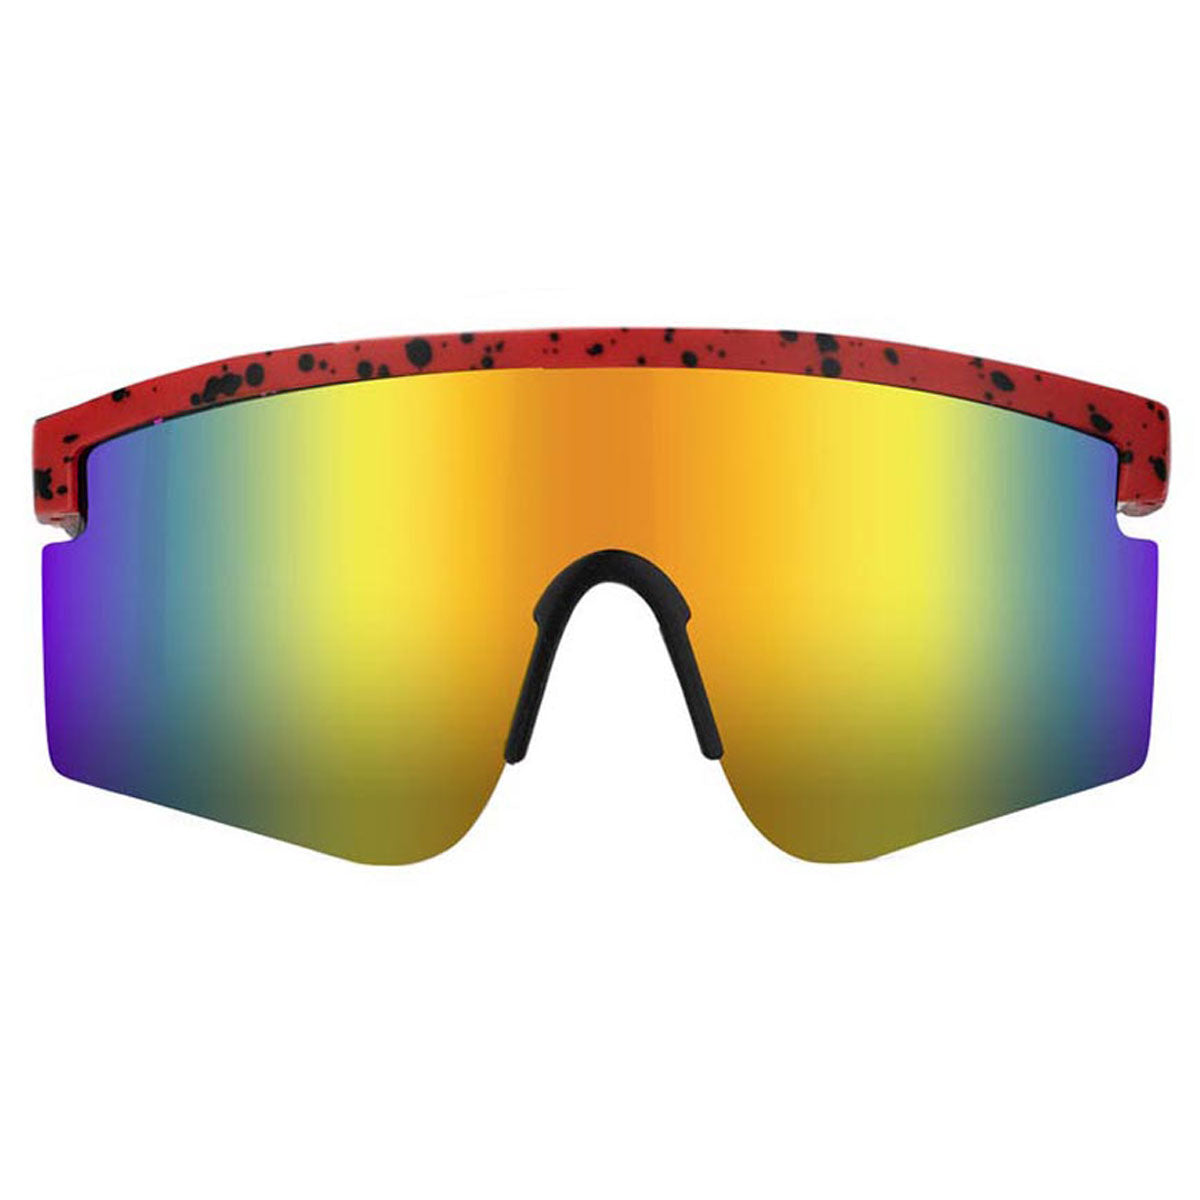 Glassy Mojave Polarized Sunglasses - Red/Yellow Mirror image 2